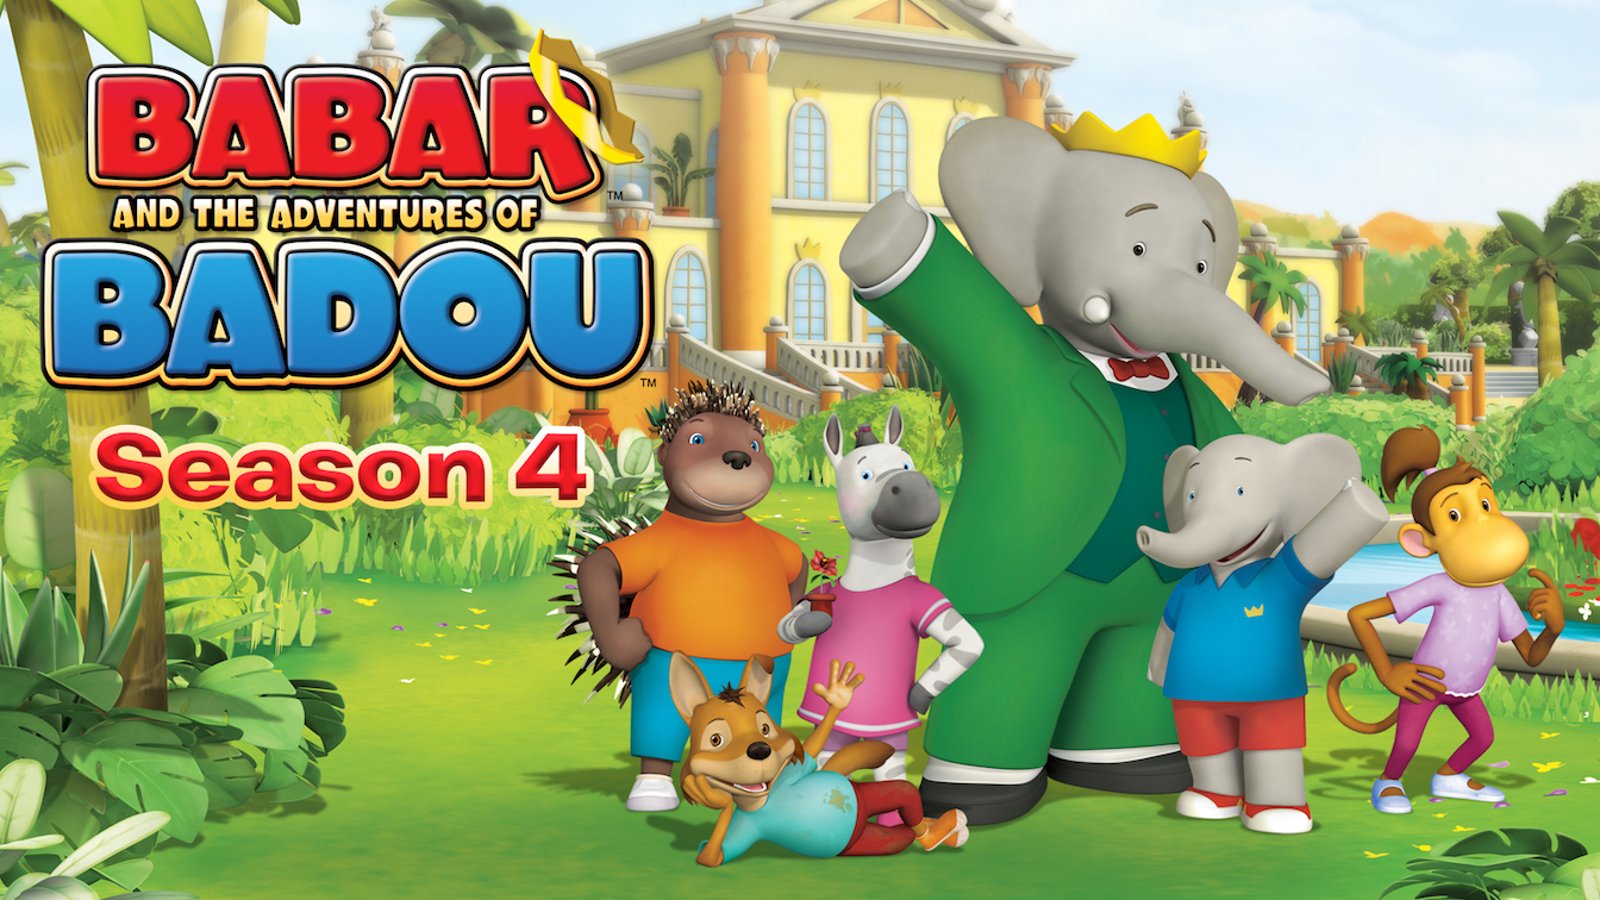 Babar and the Adventures of Badou Season 4